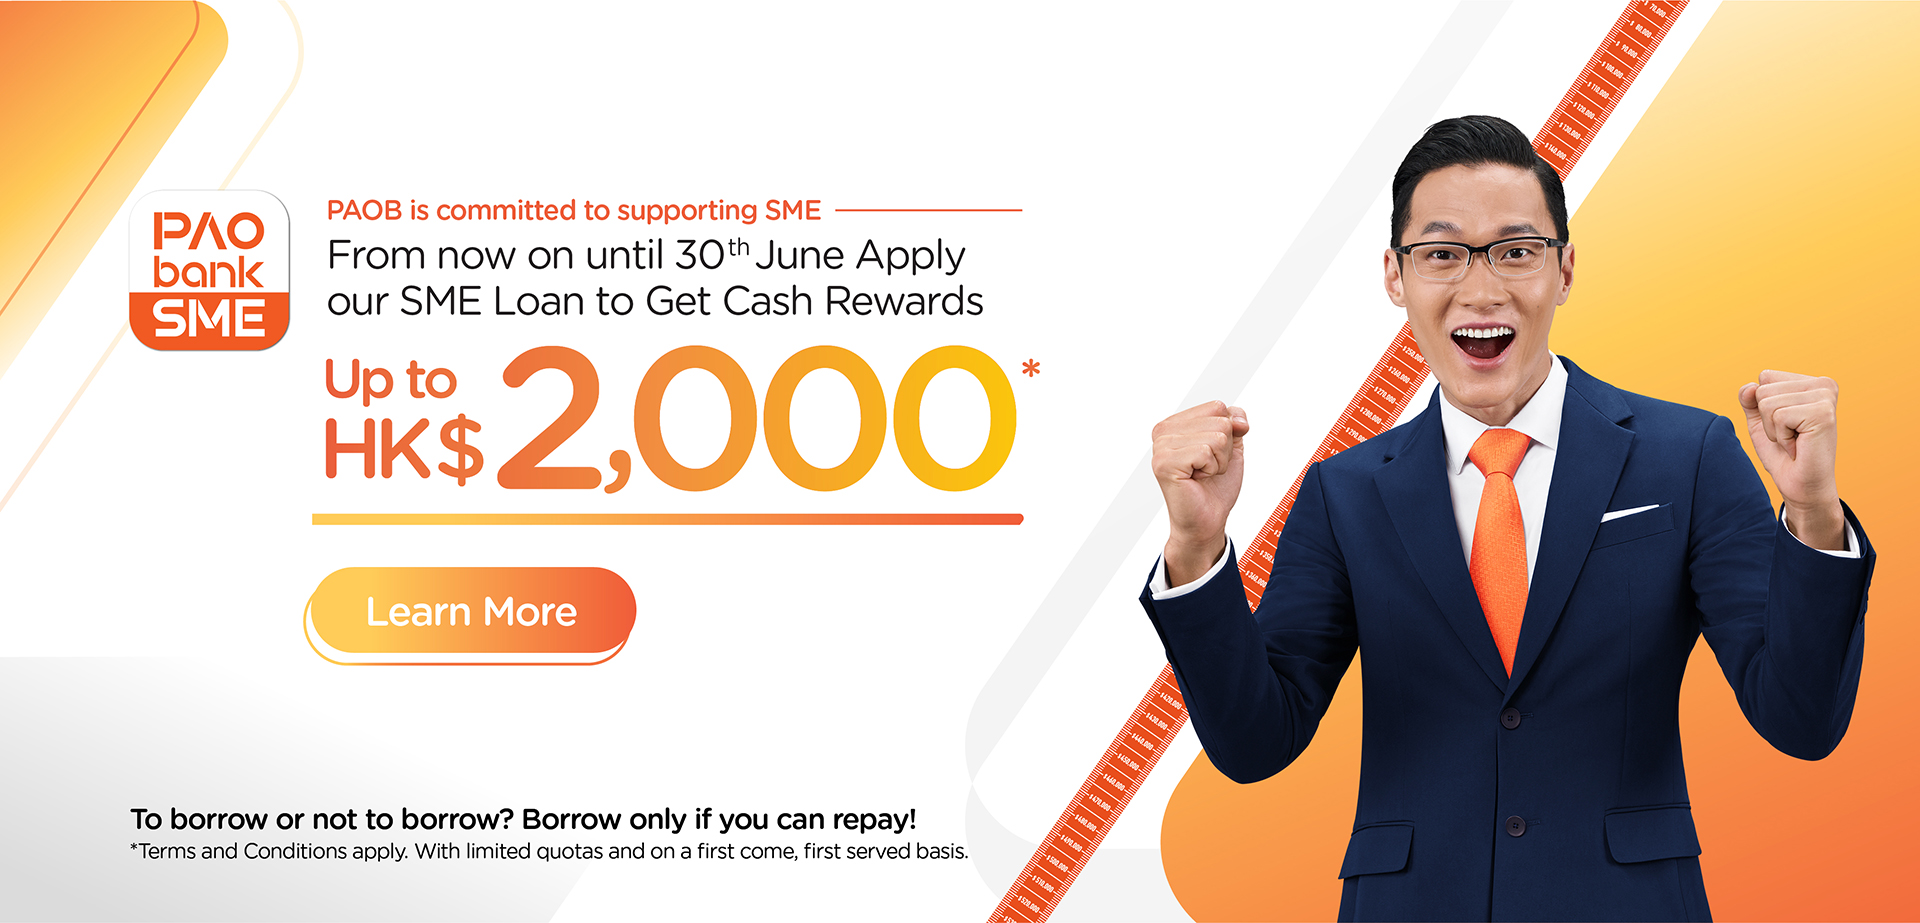 PAOB SME Services - SME Loan Cash Reward Offer